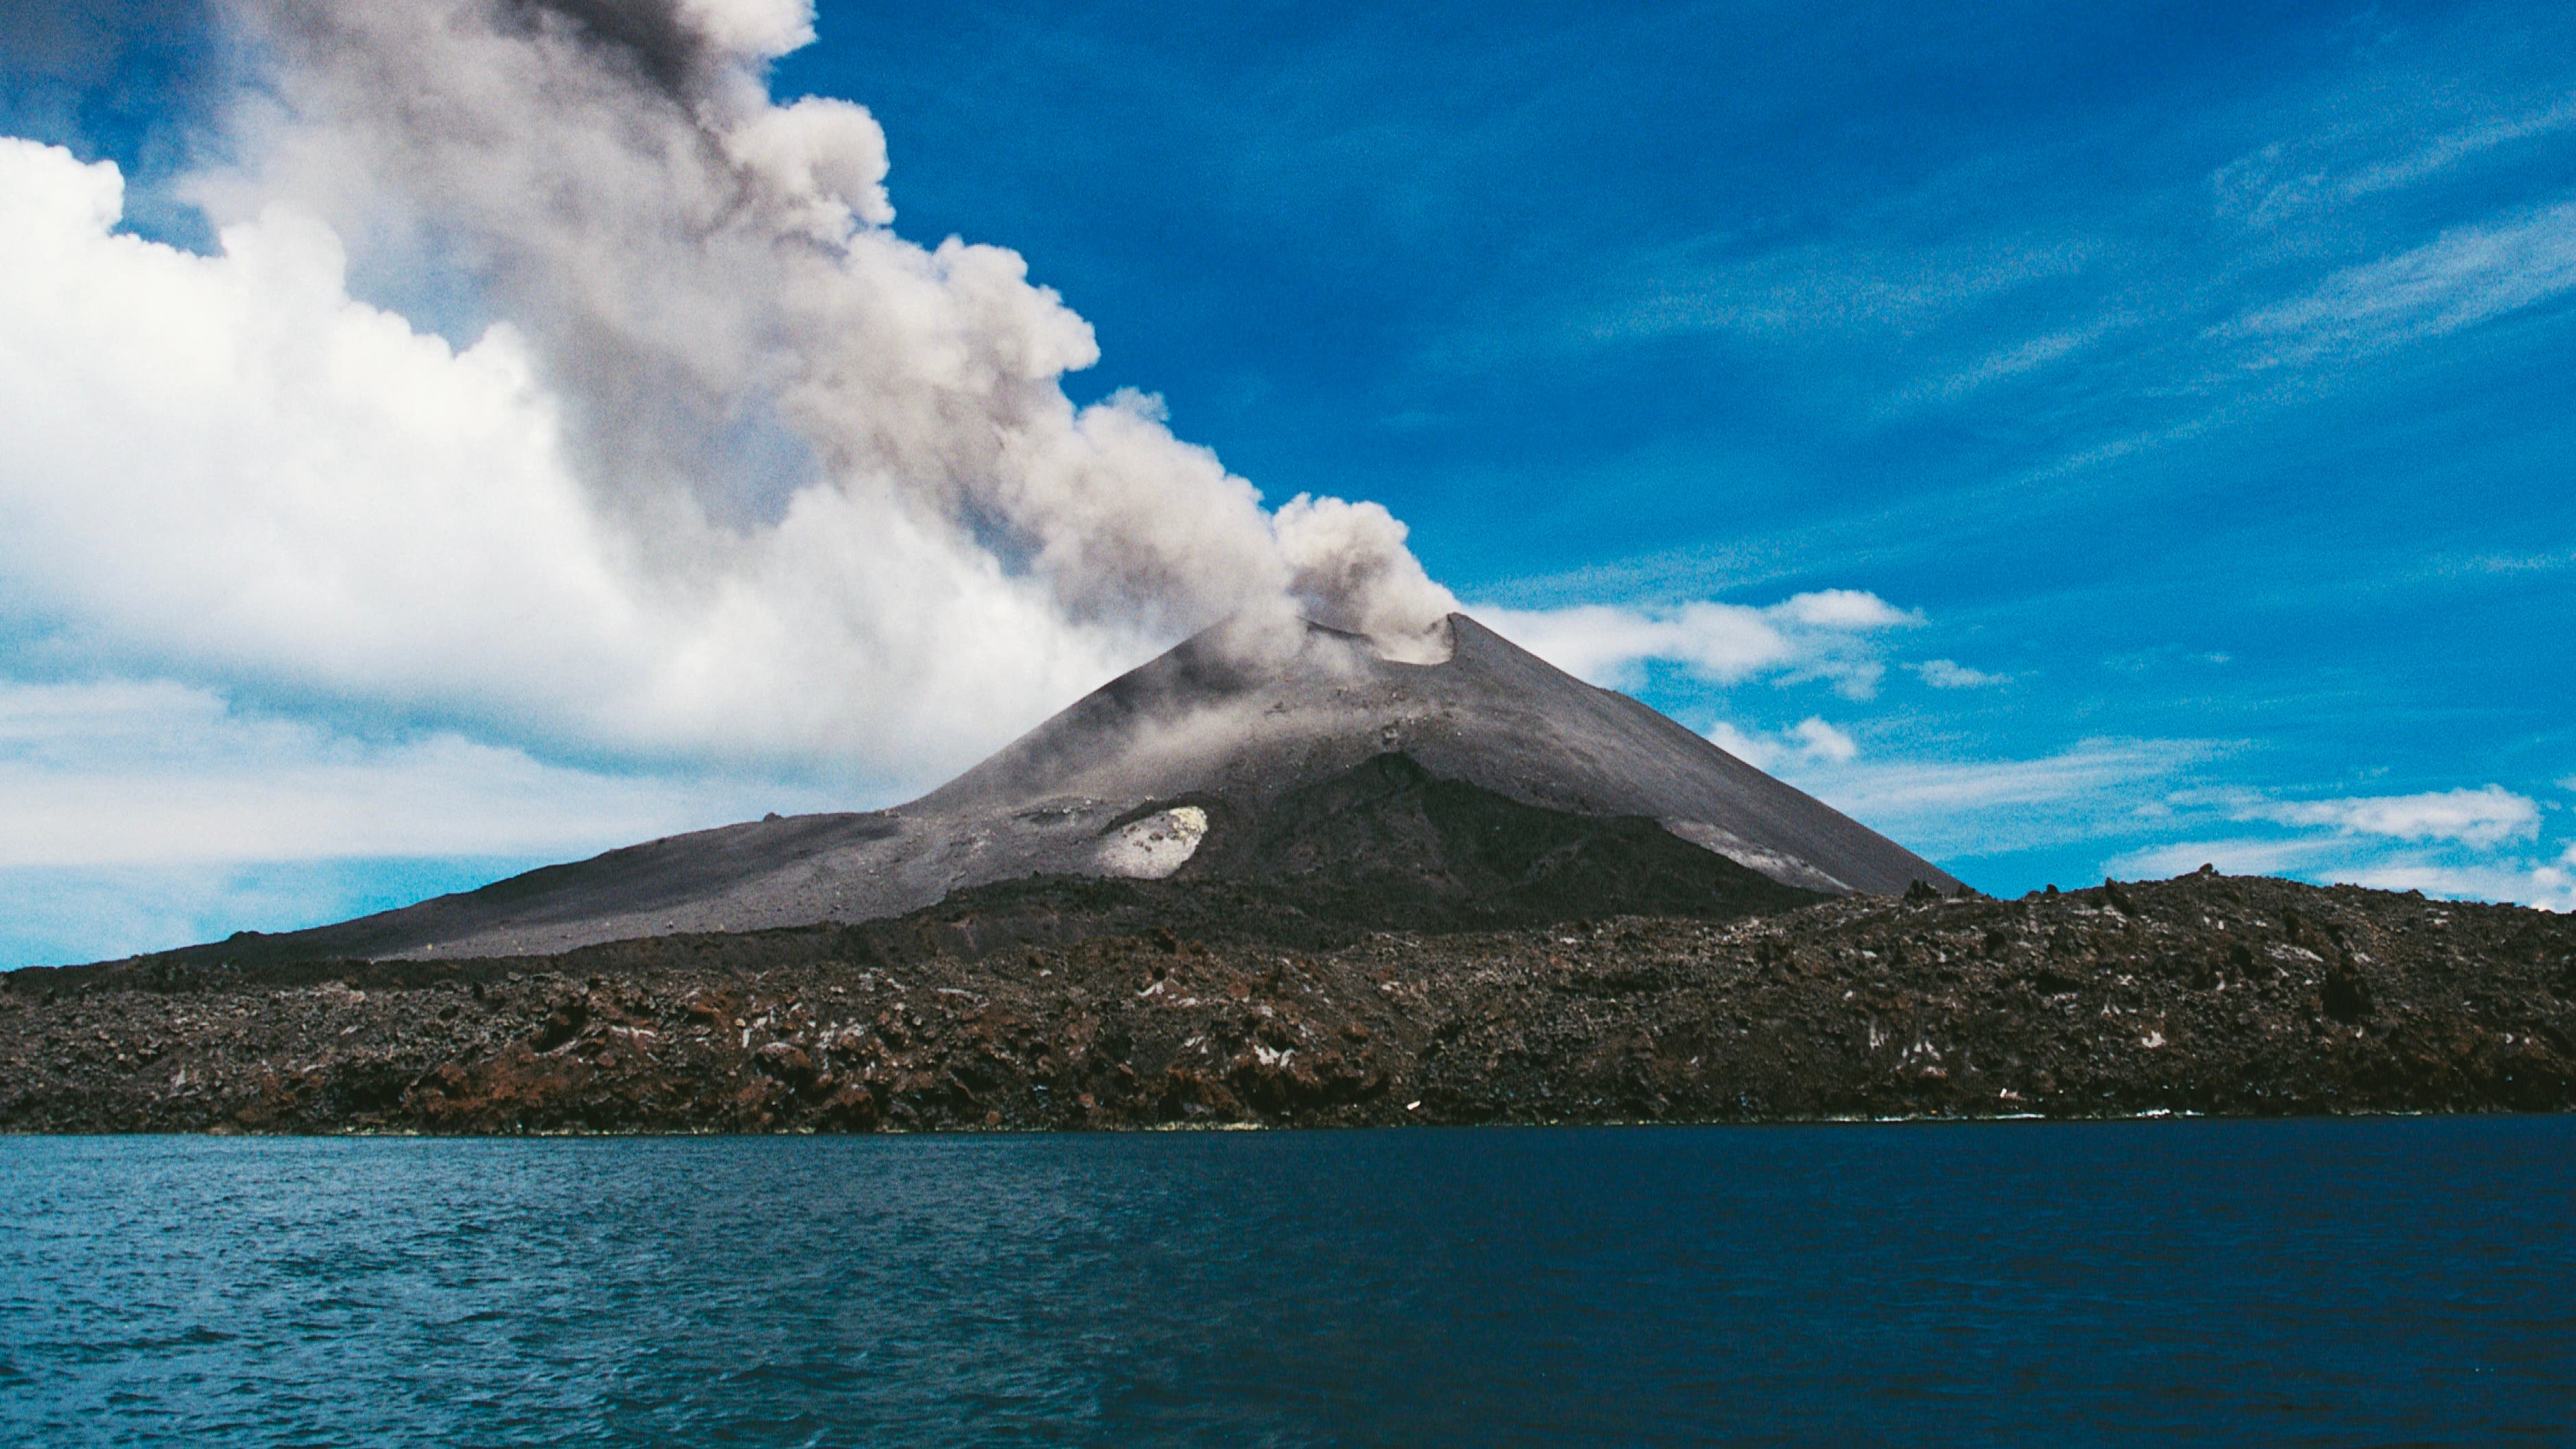 Krakatau volcano (Krakatoa) erupting, Java island, Indonesia, c. 2003.